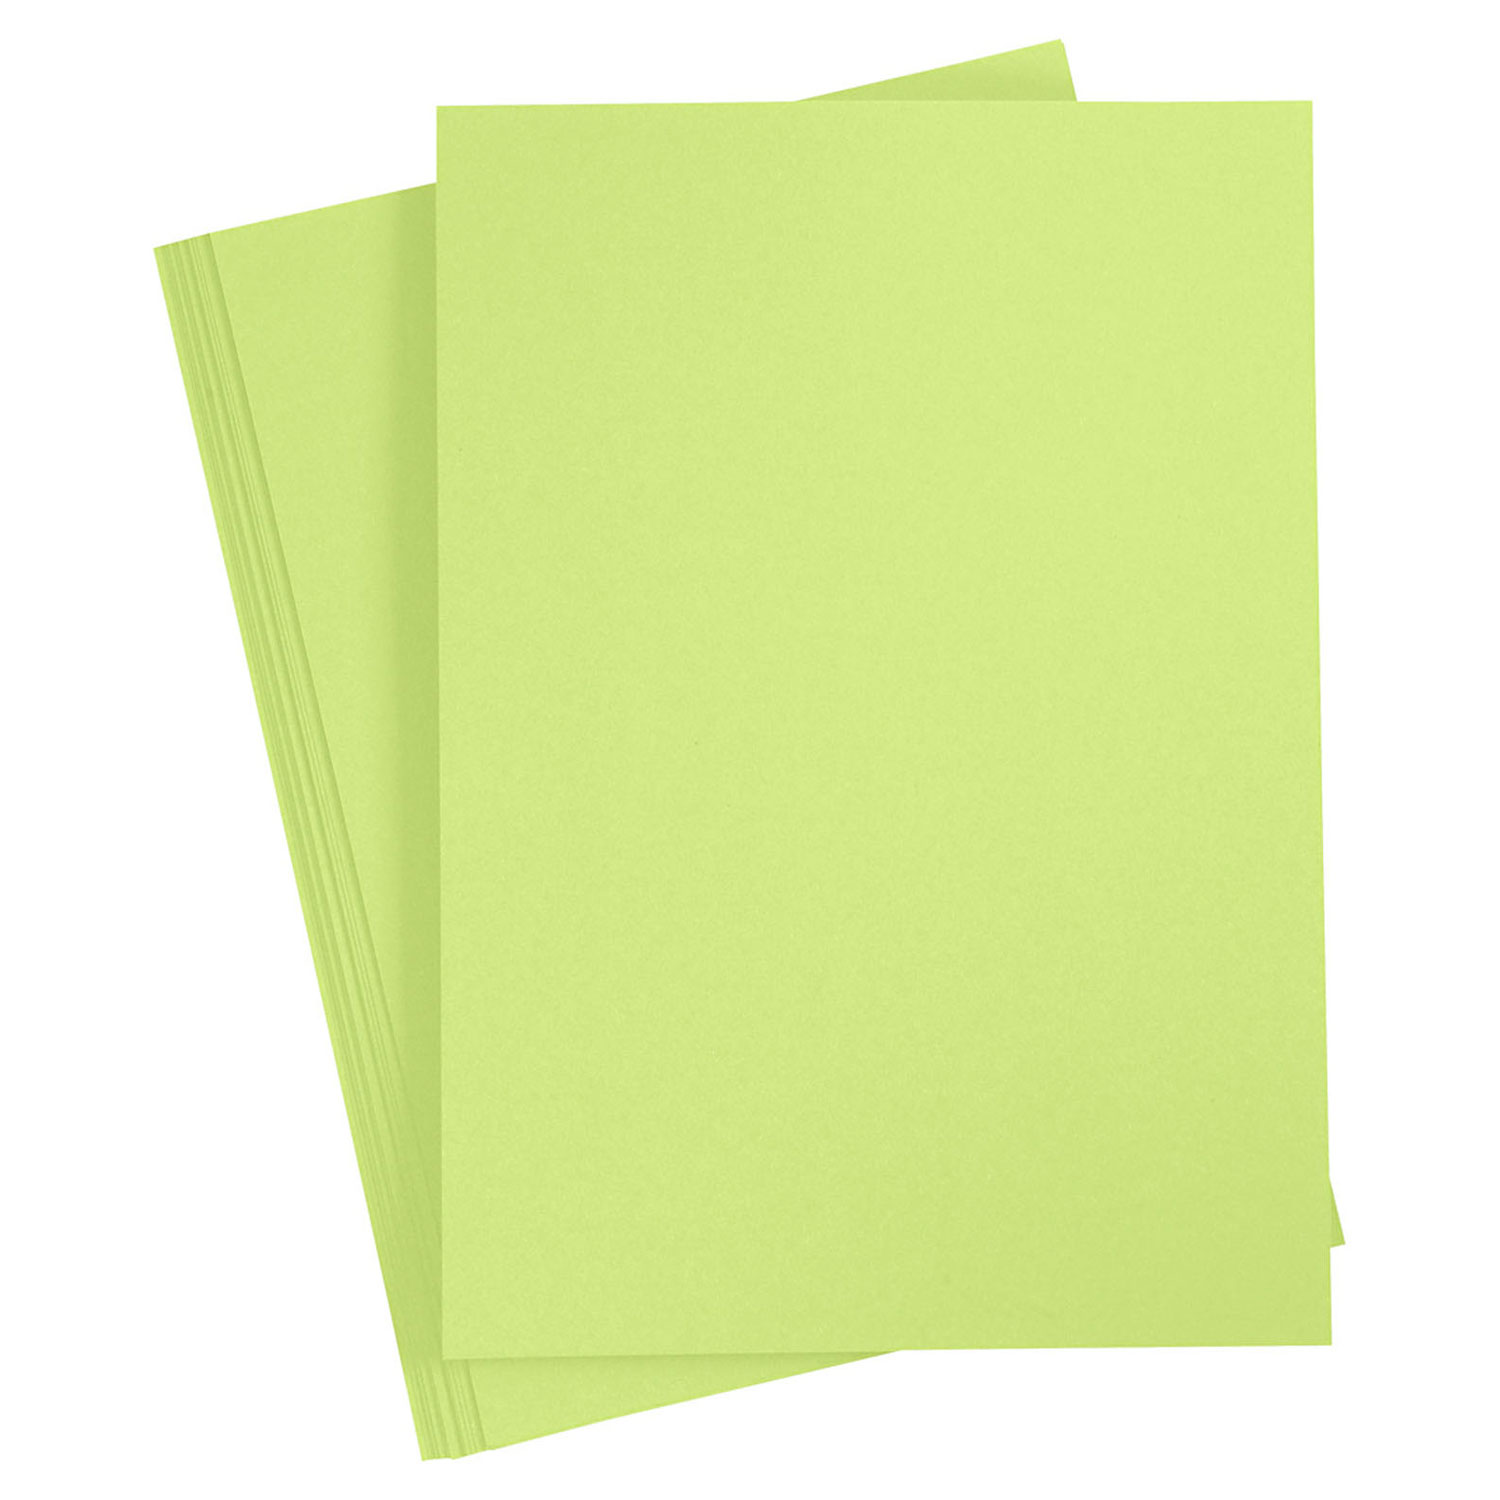 Dij Apt Voorkeur Gekleurd Karton Lime Groen A4, 20 vel online kopen? | Lobbes Speelgoed